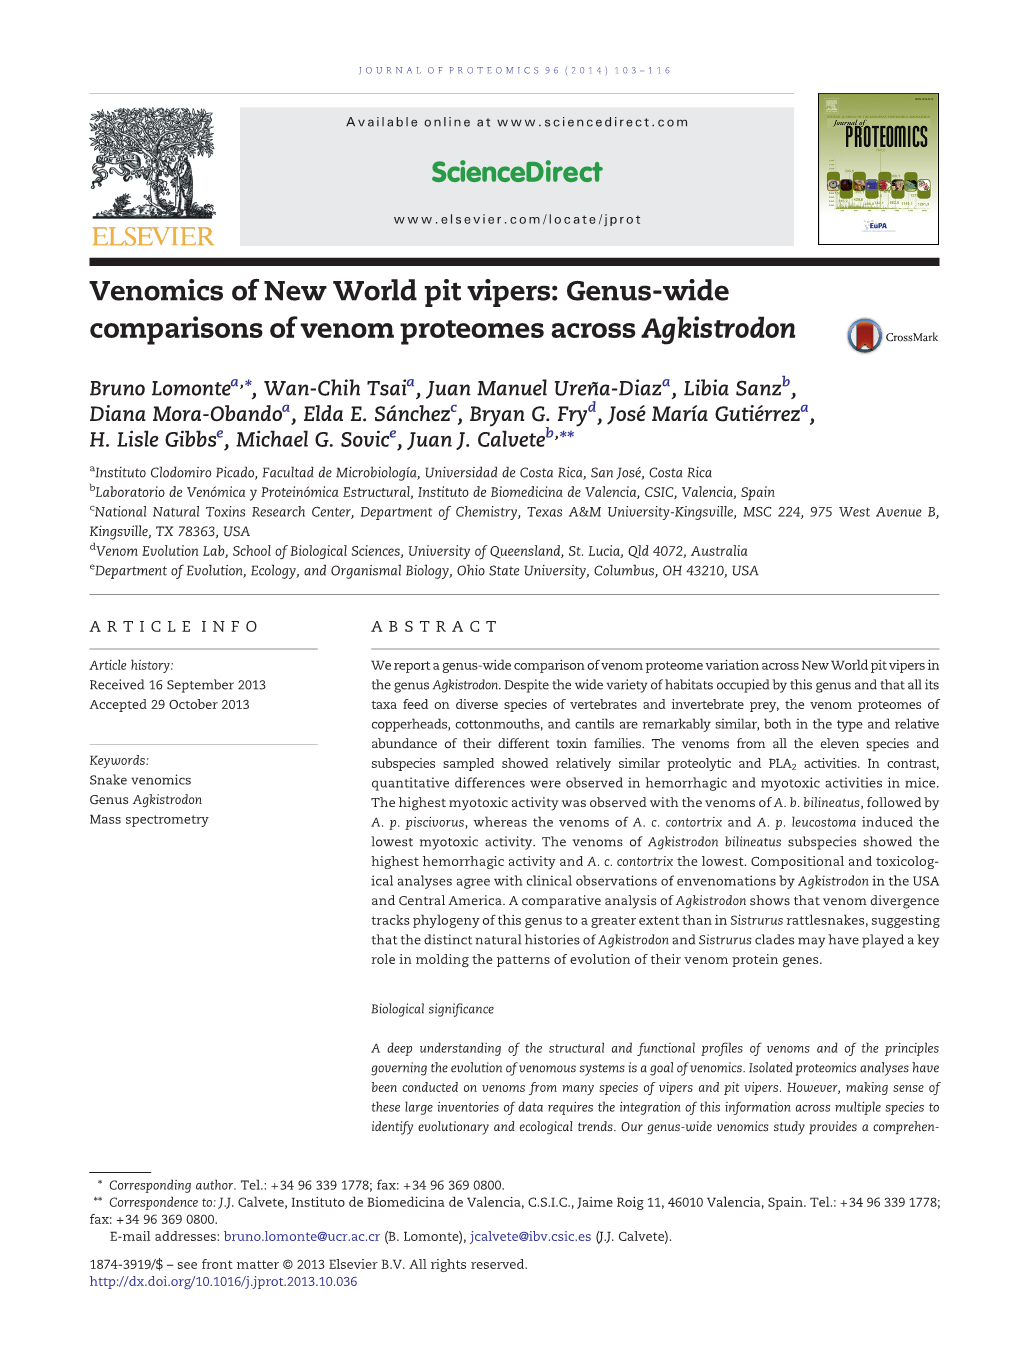 Genus-Wide Comparisons of Venom Proteomes Across Agkistrodon